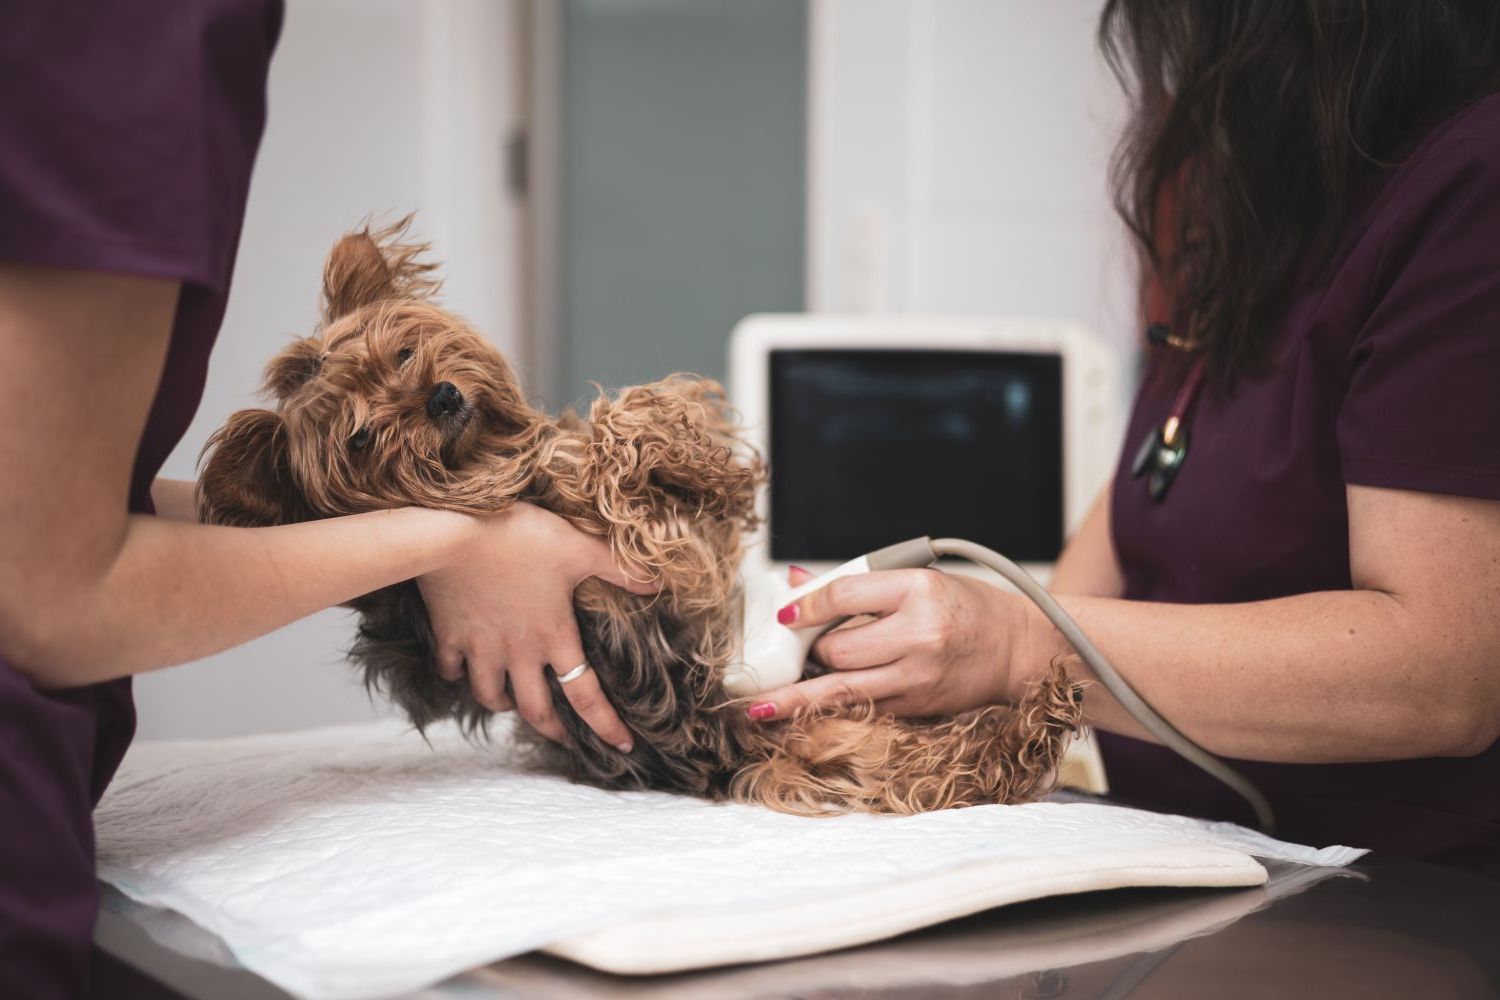 Veterinary Technology – A.A.S.